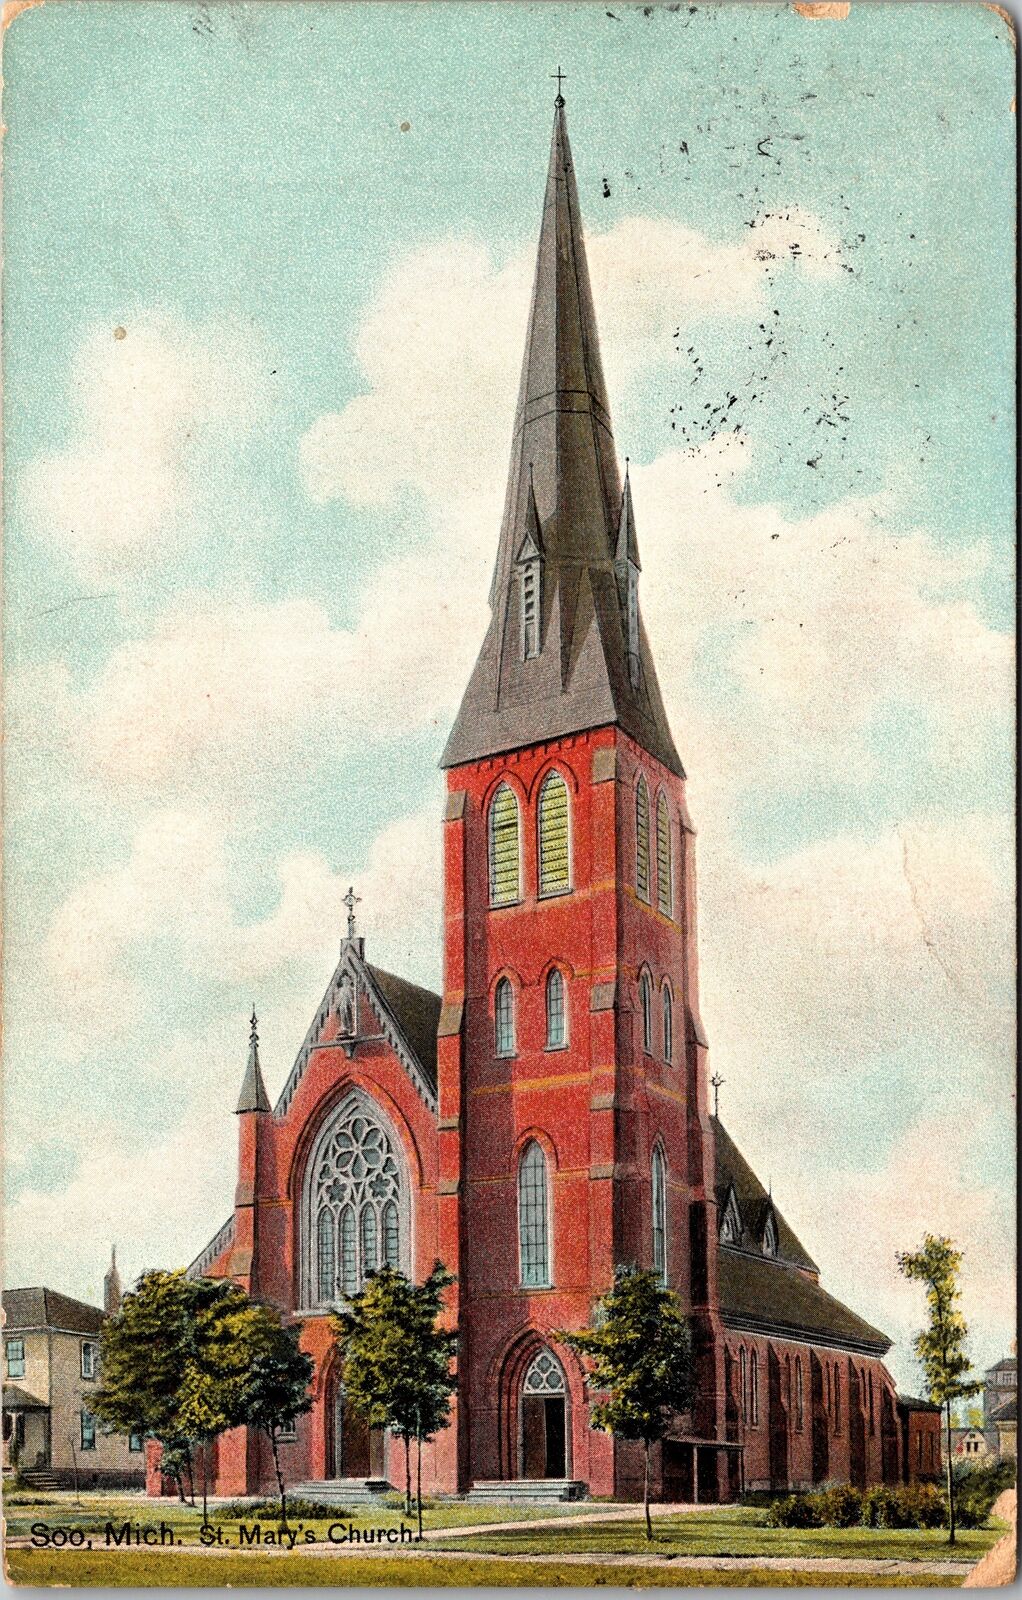 Soo MI-Michigan, St Mary's Church Vintage Souvenir Postcard